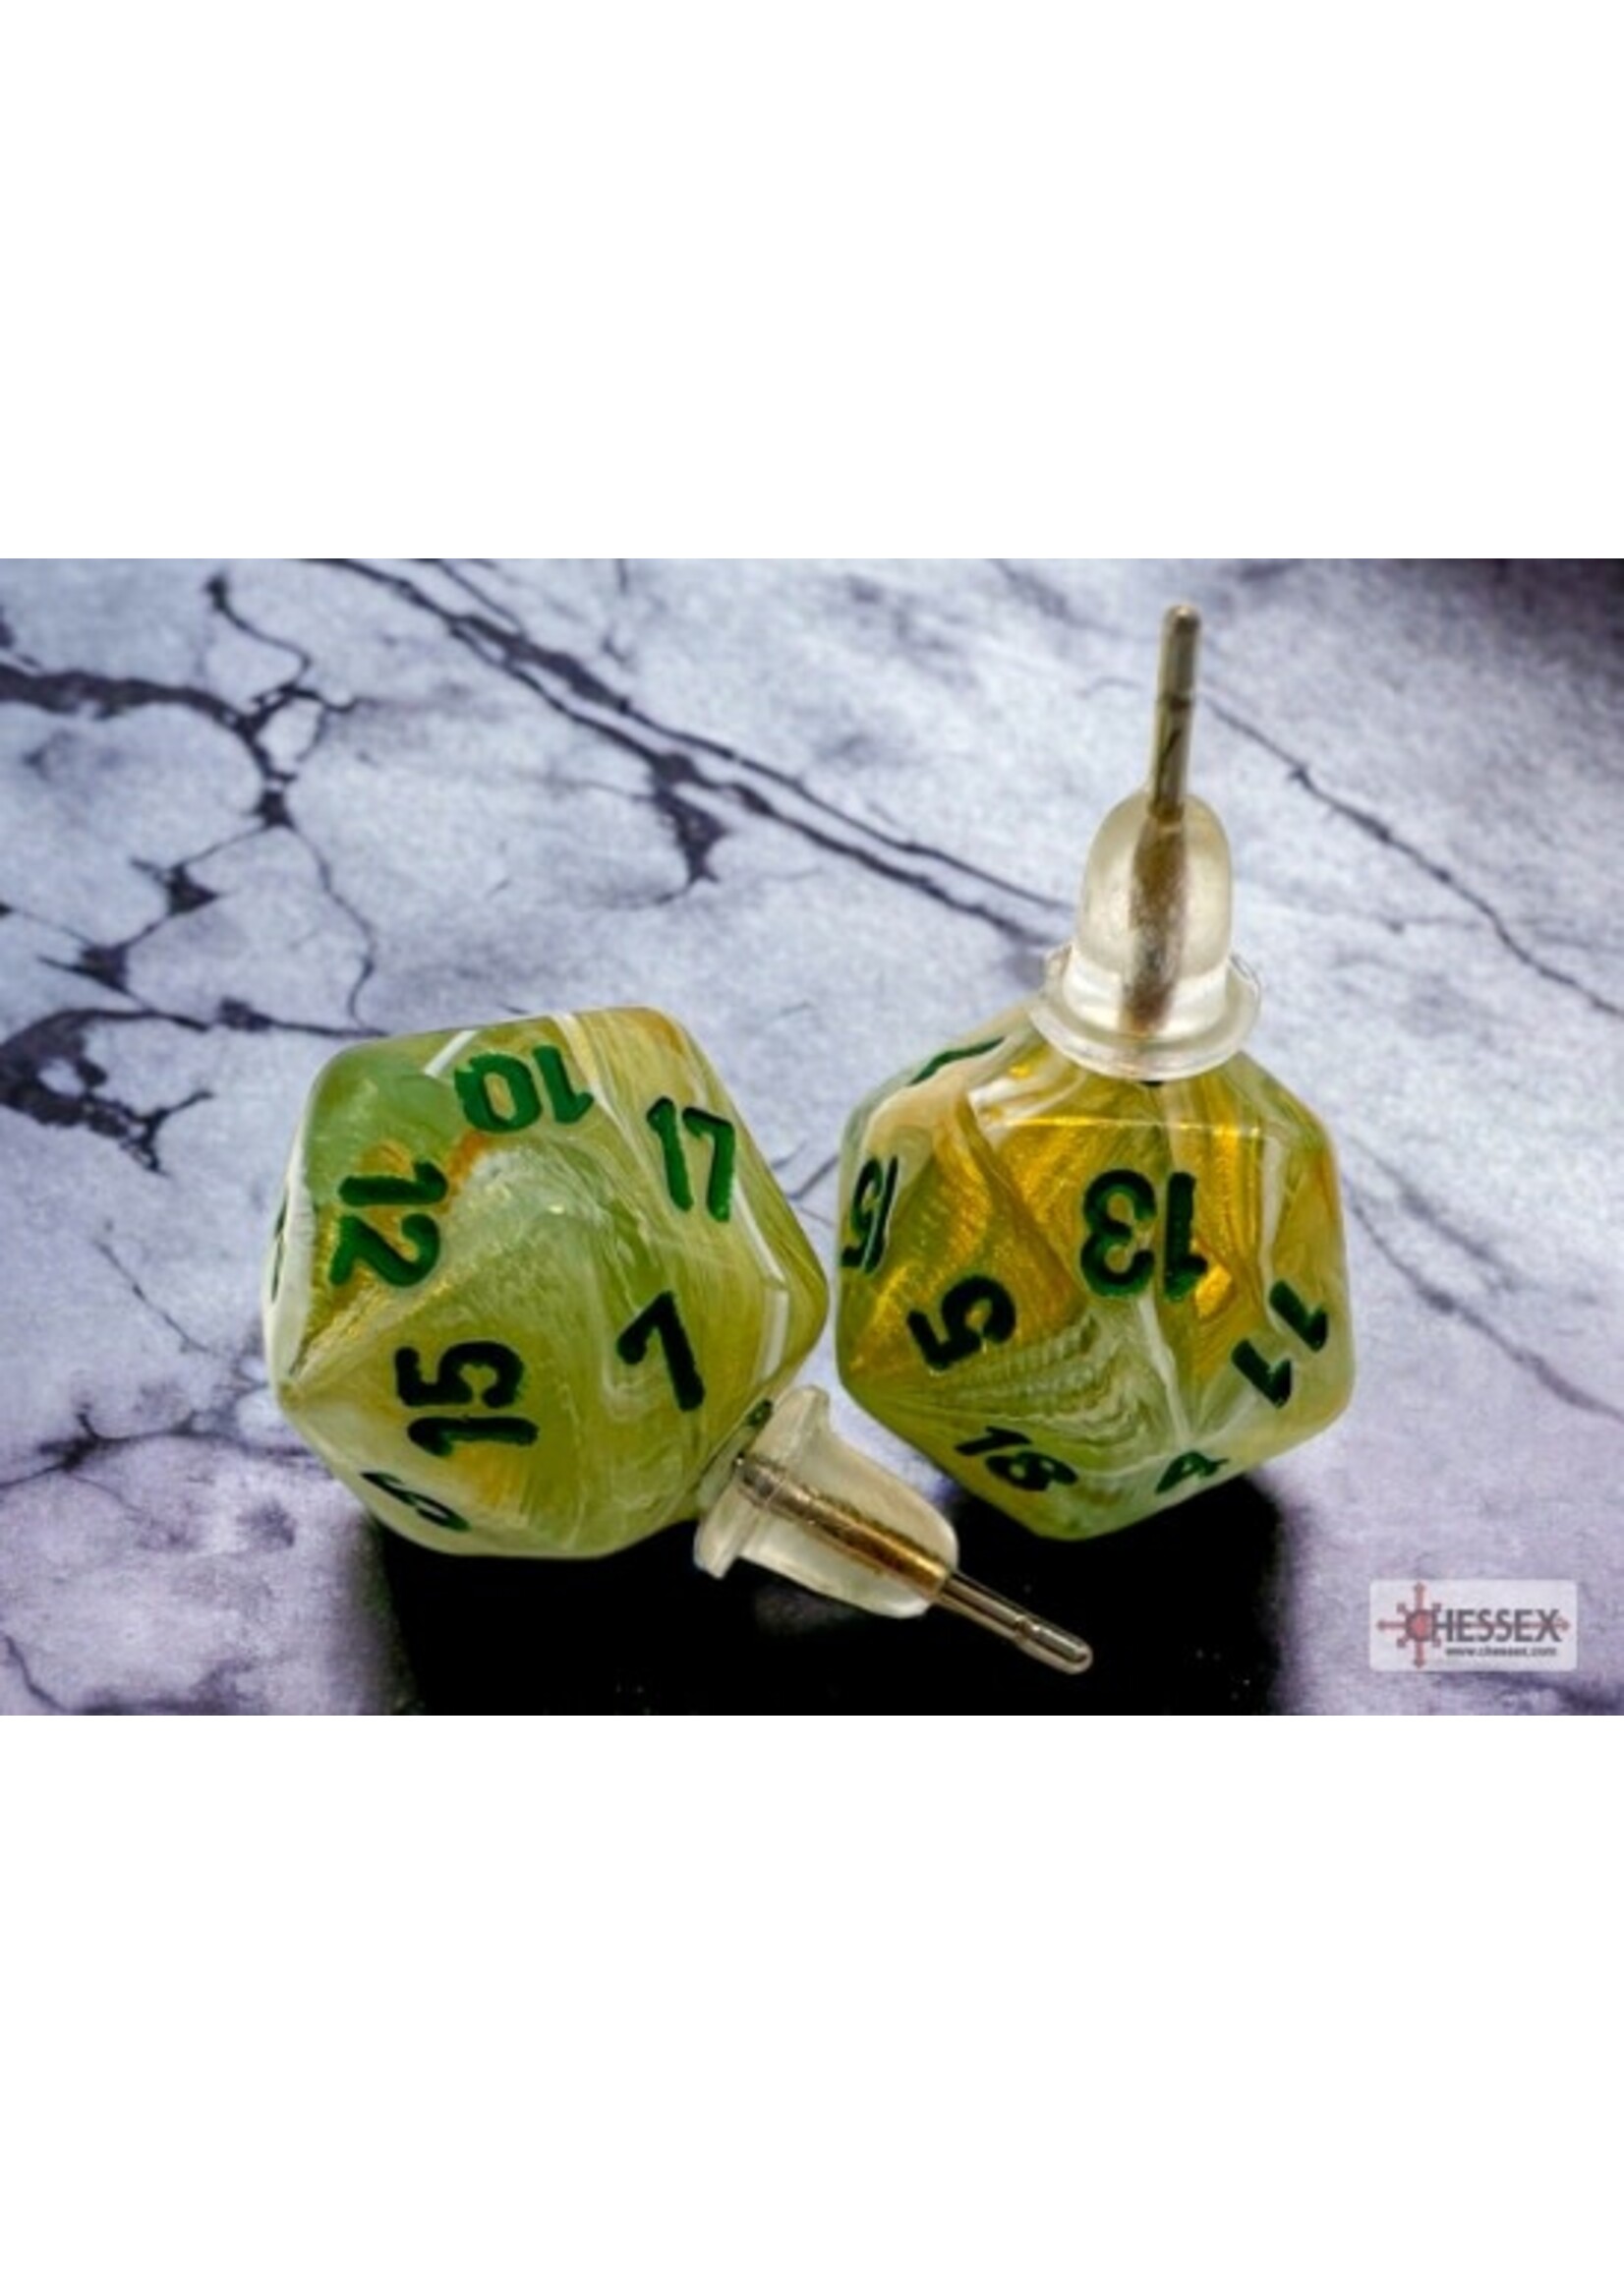 Chessex Stud Earrings Mini d20 - Marble Green